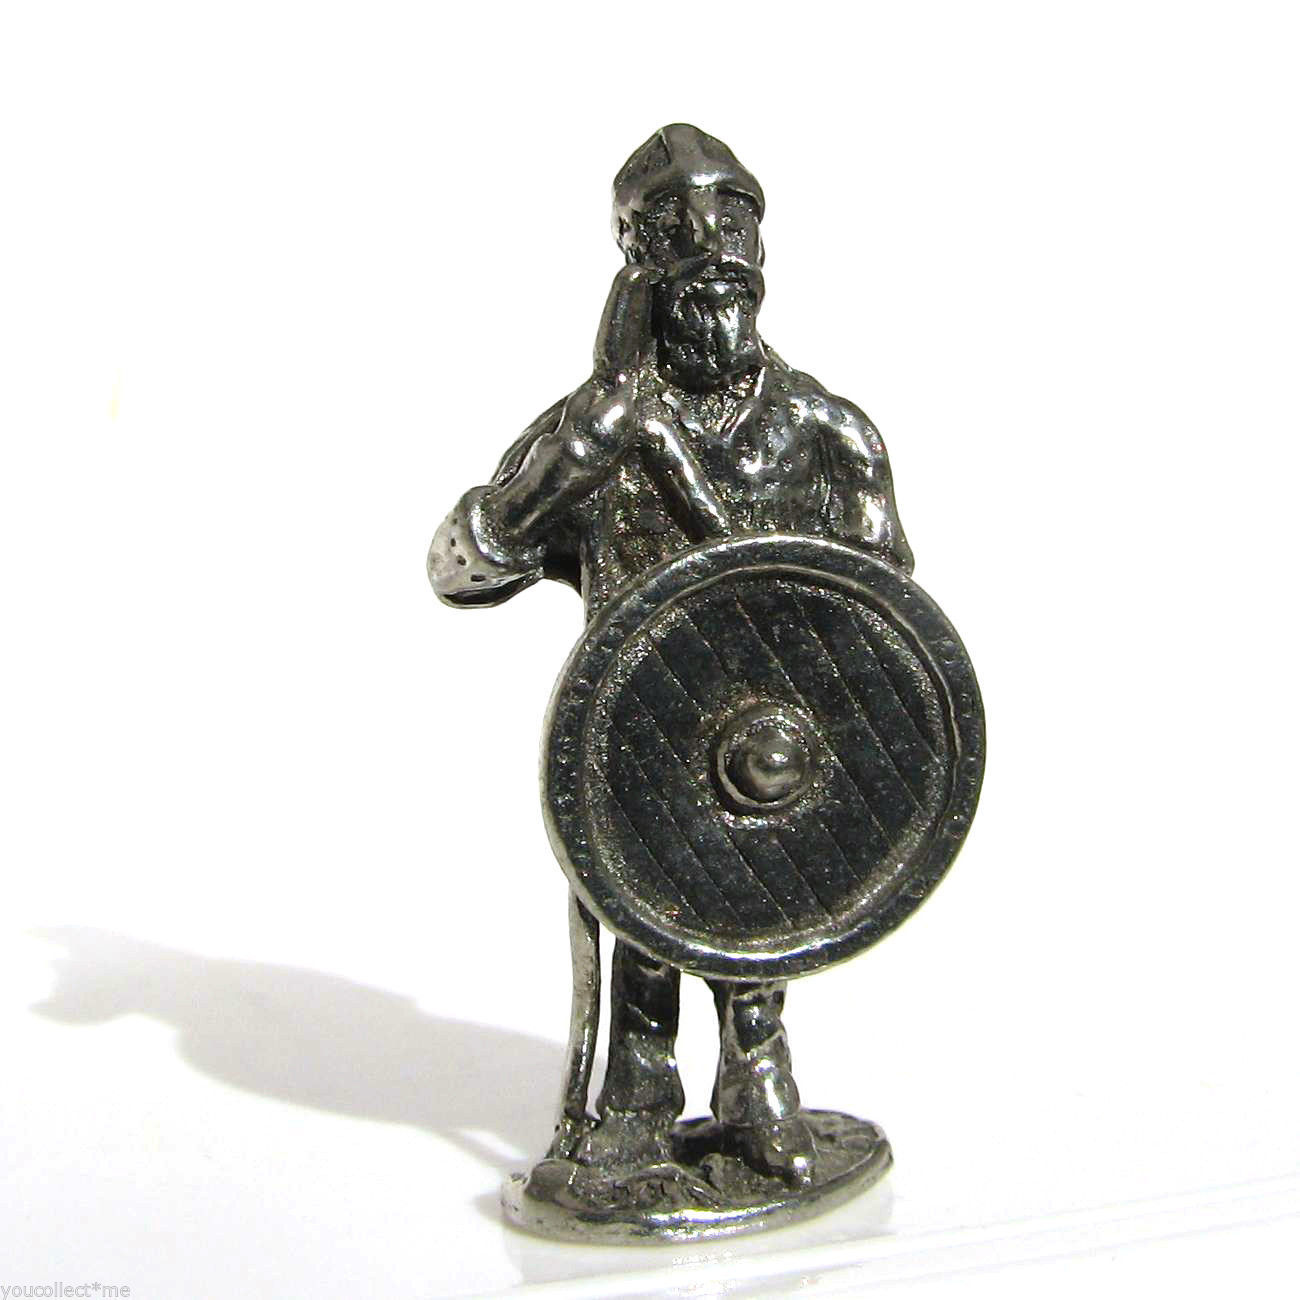 Primary image for Viking #4 Kinder Surprise Size Metal Soldier Figurine Vintage Toy 4 cm